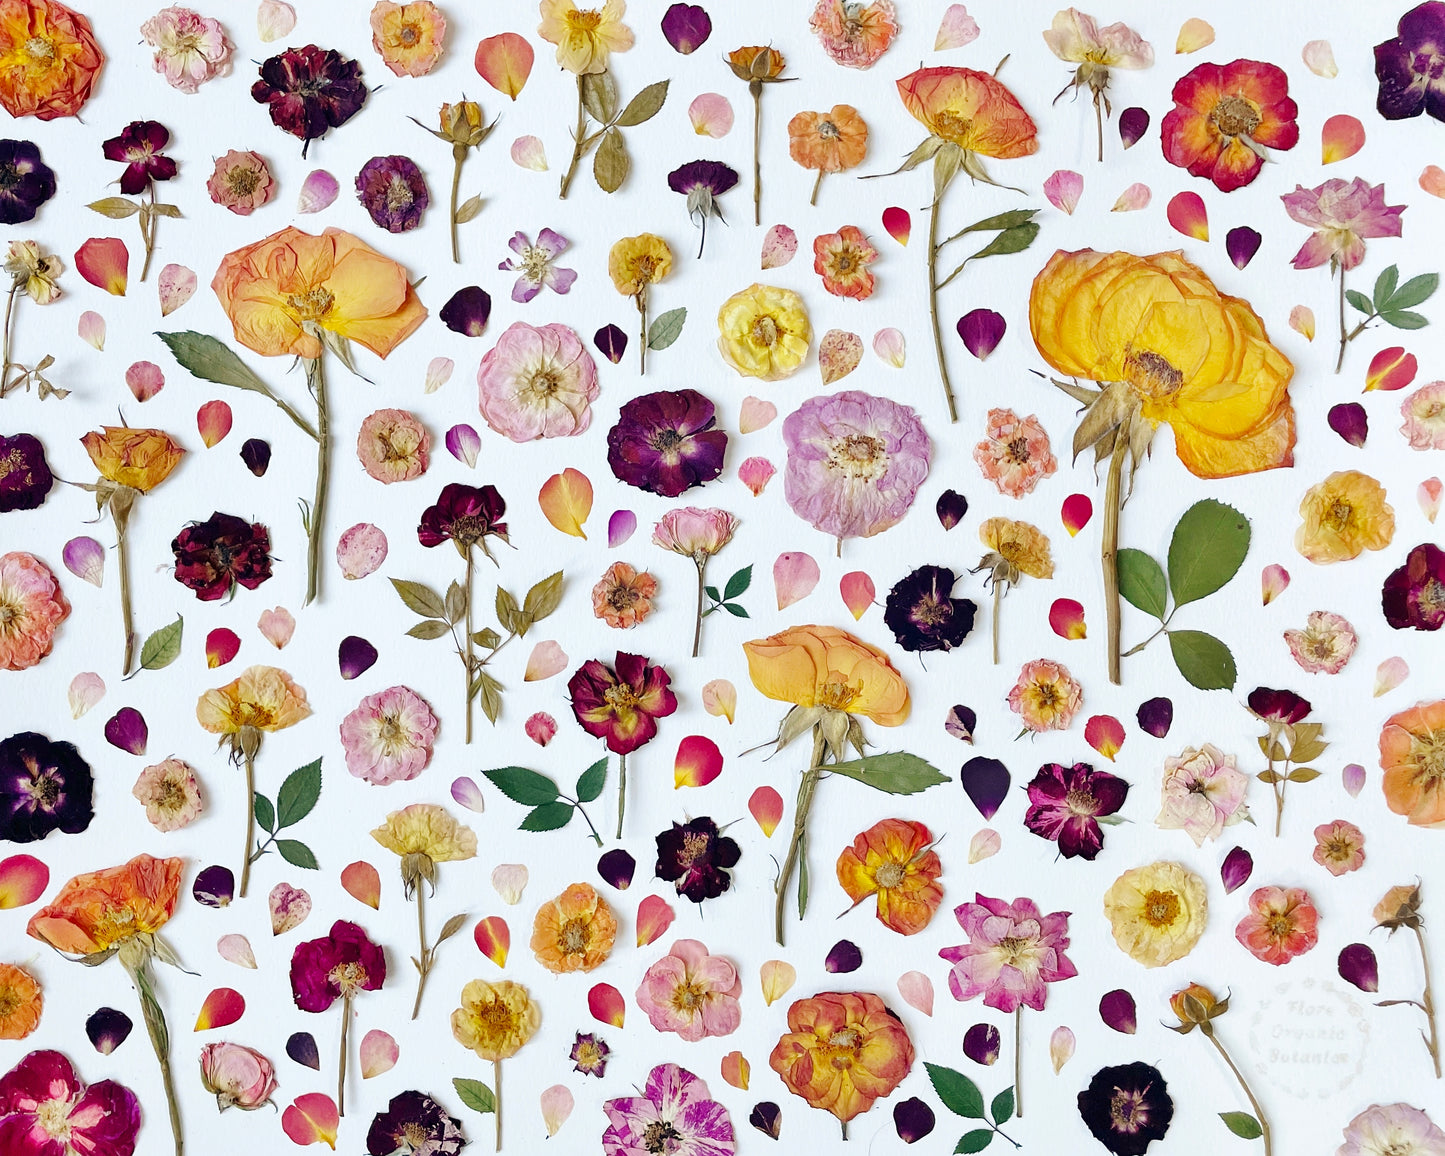 "Rose Lover" Botanical Art Collage